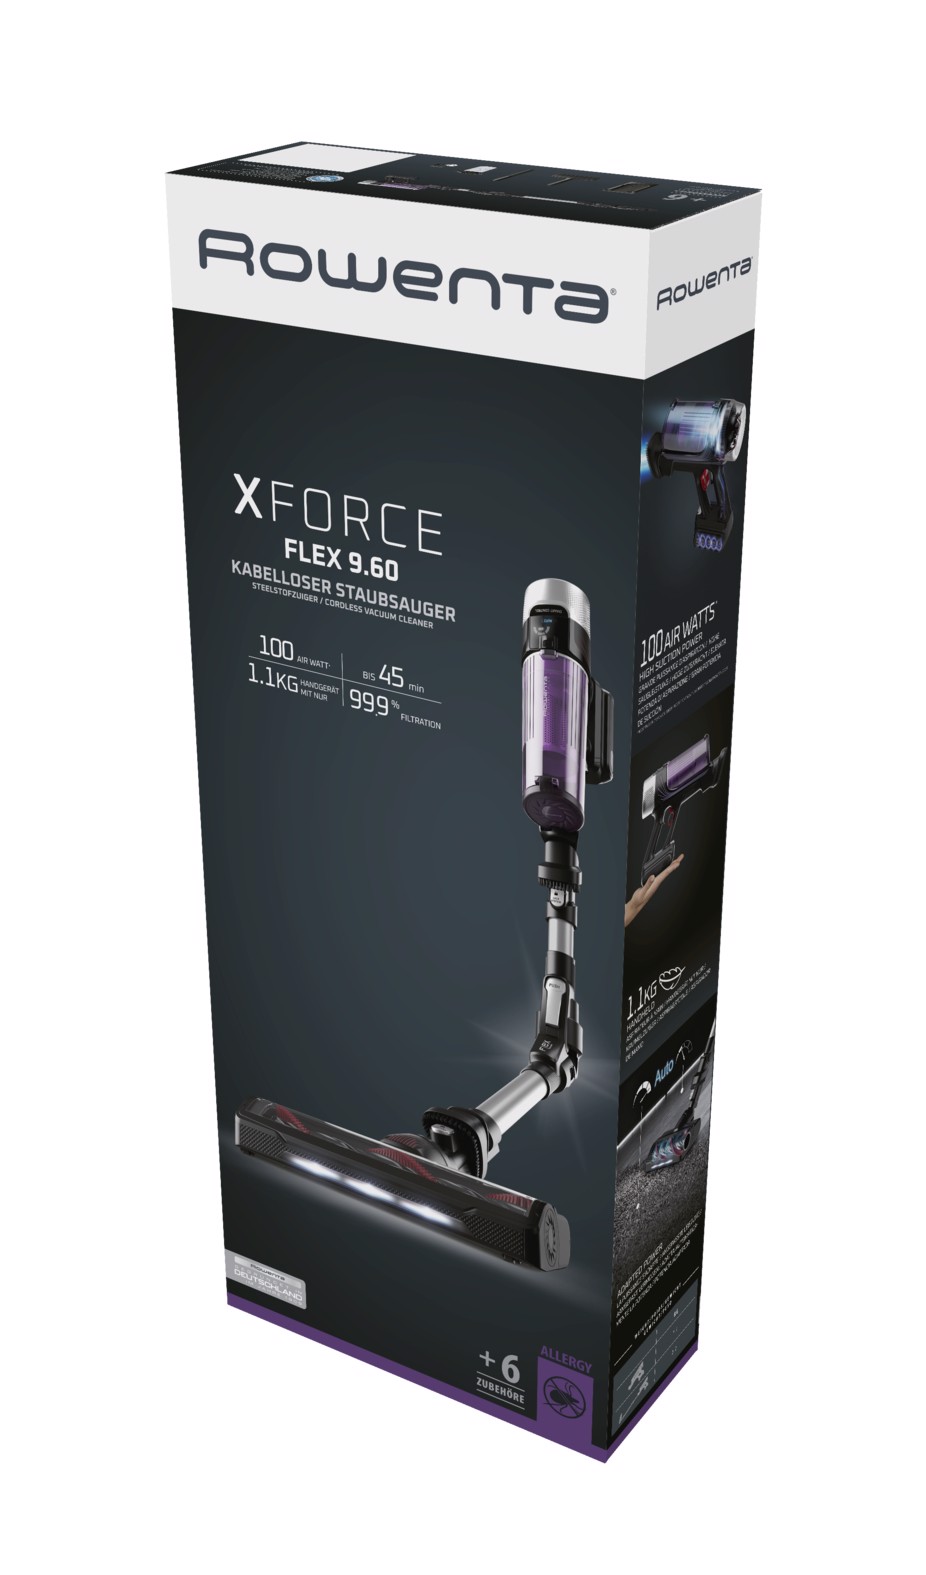 X-Force Flex 9.60 de la Rowenta 